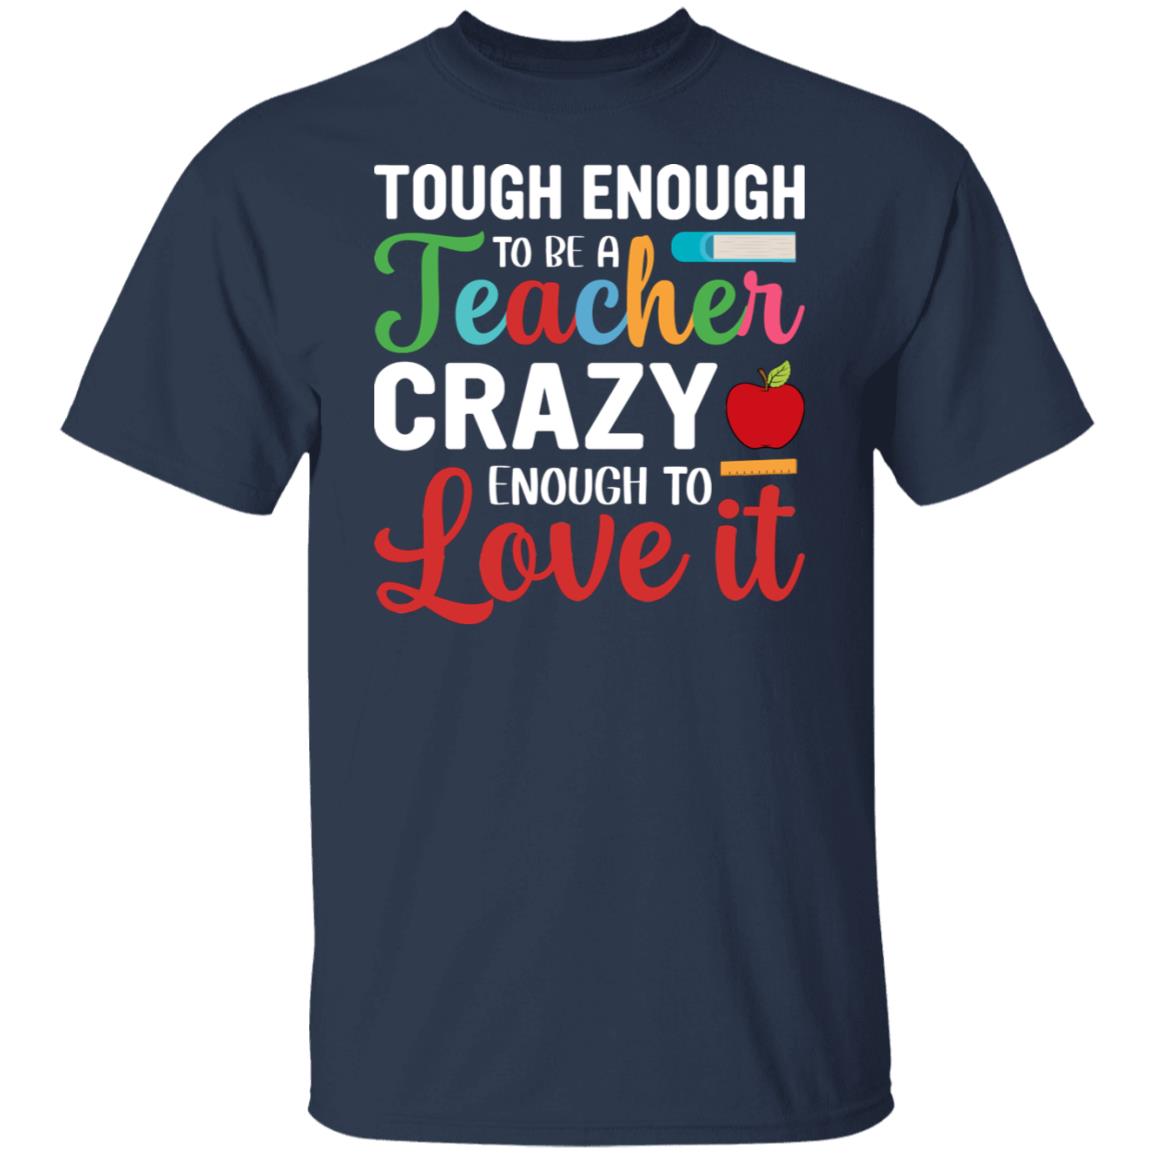 Tough Enough To Be a Teacher Crazy Enough to Love it Funny Shirt